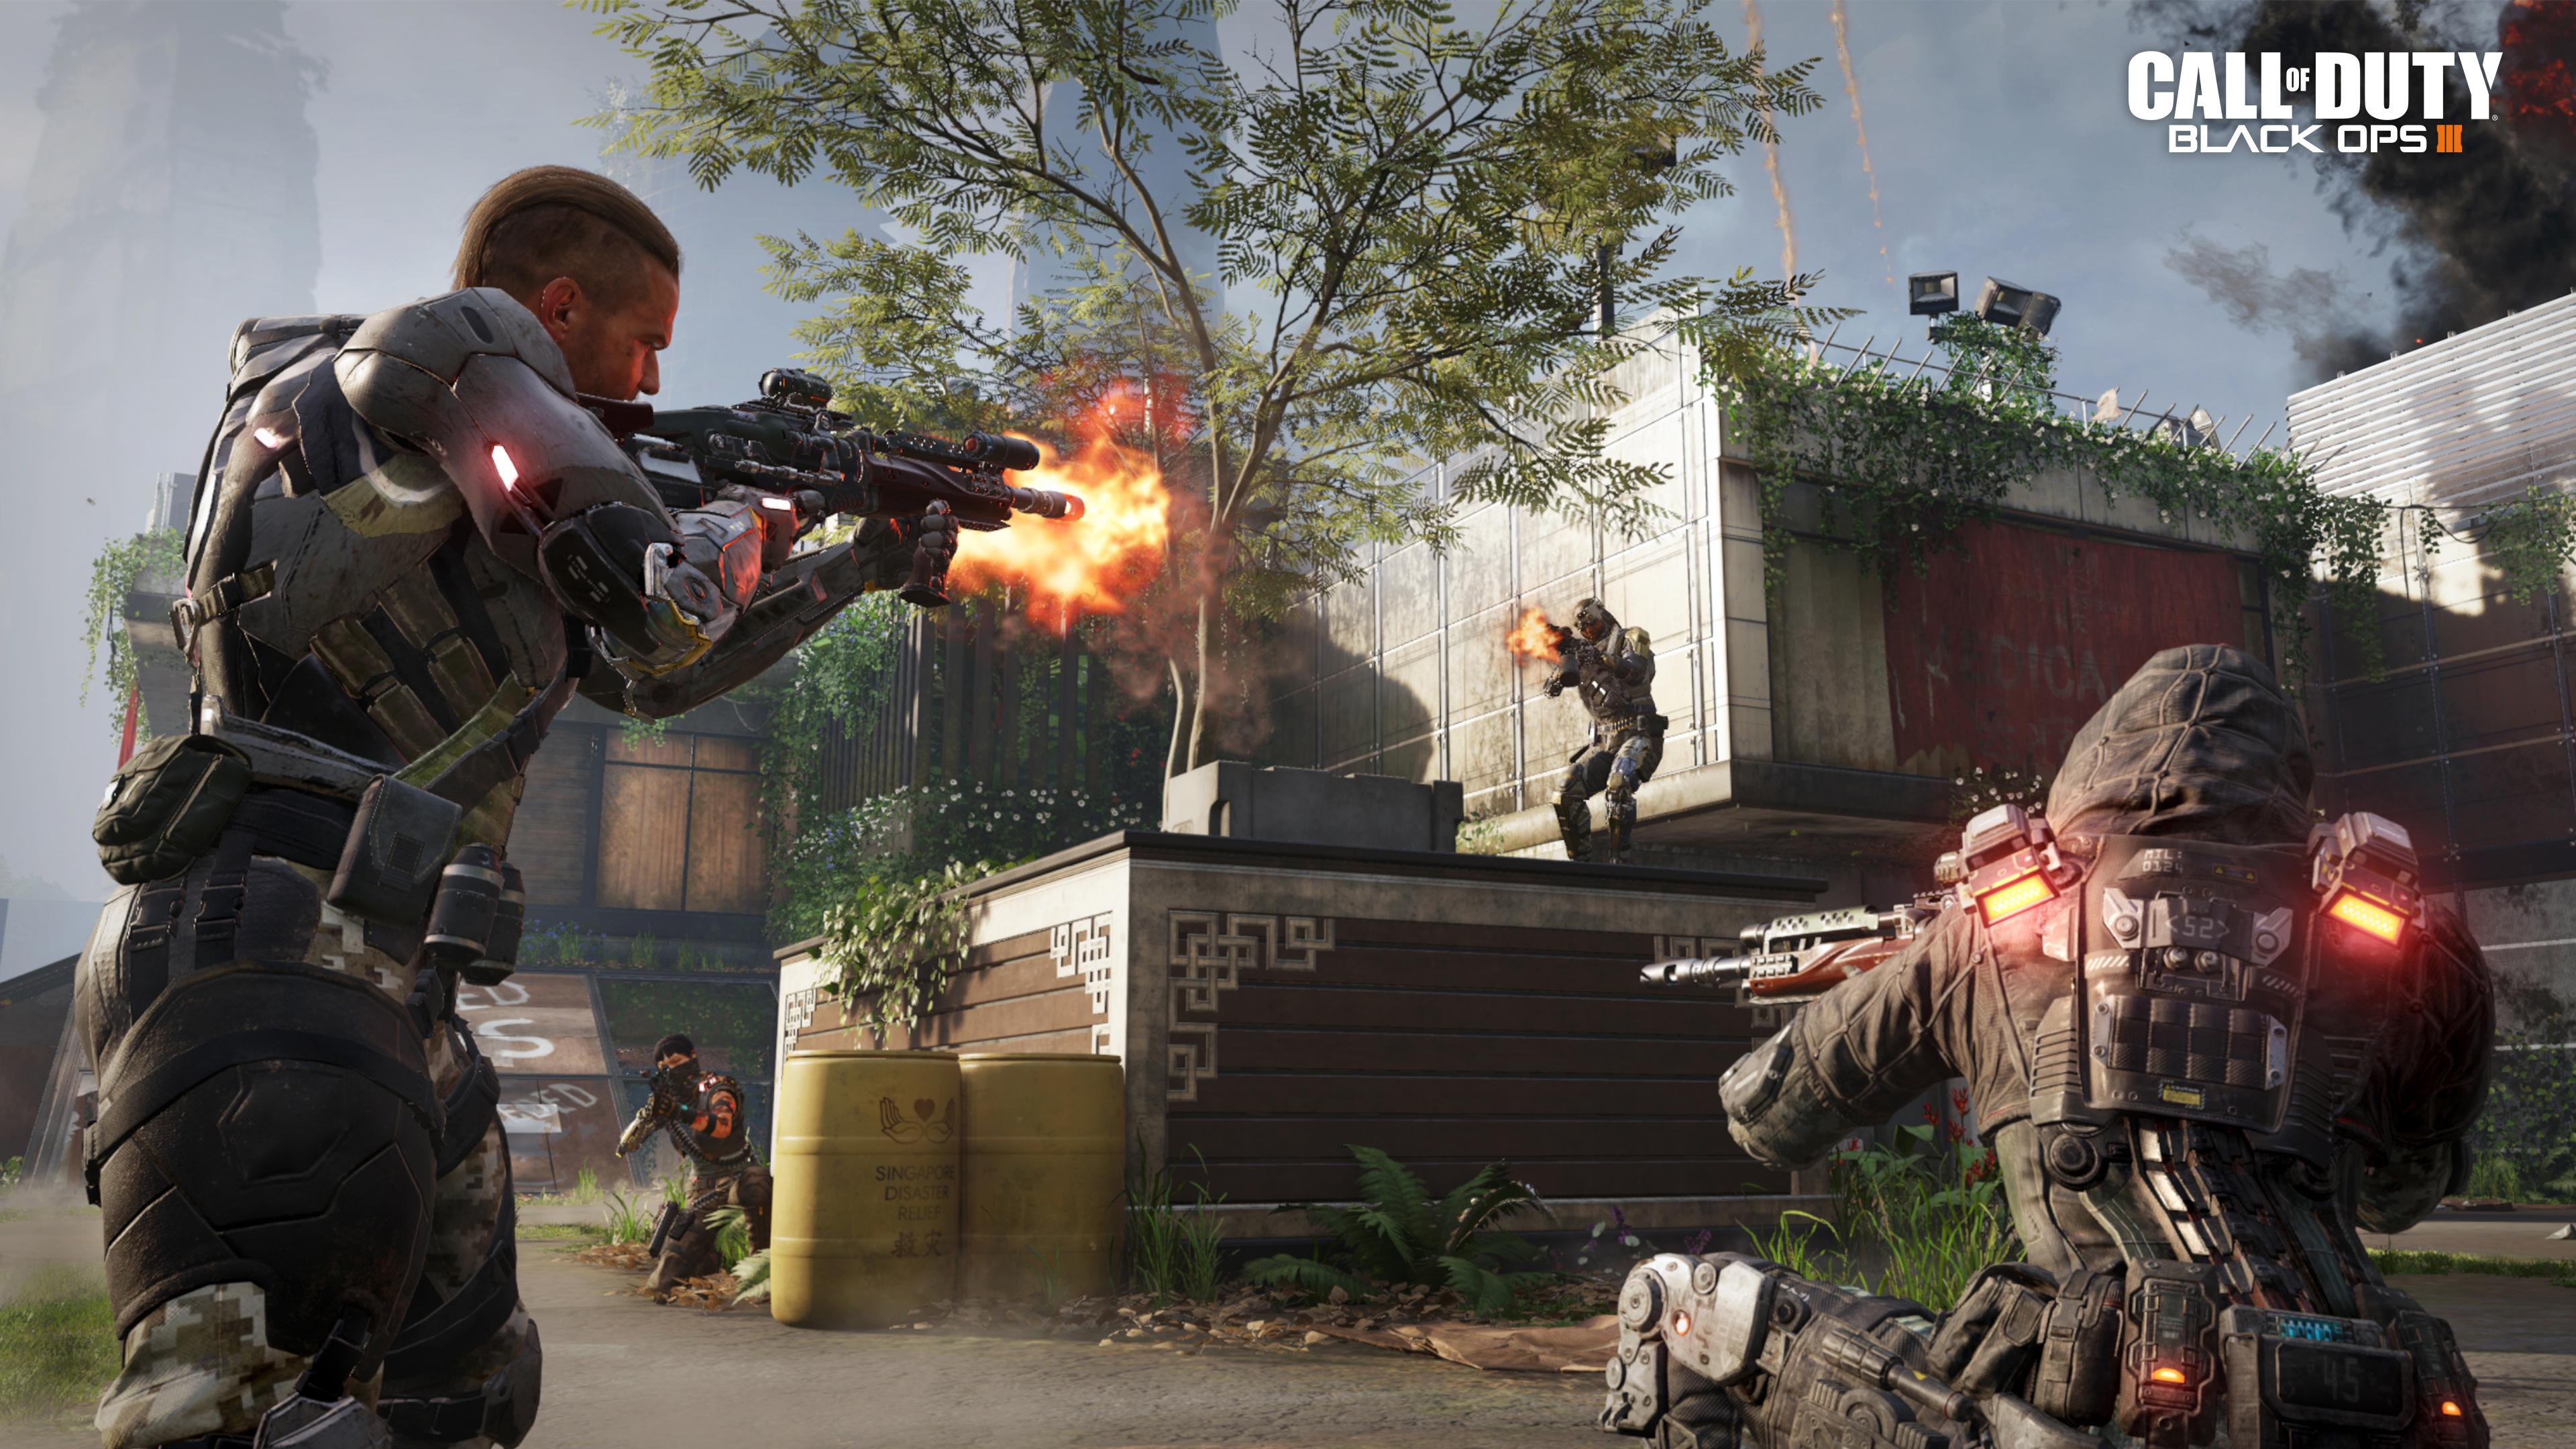 'Call of Duty: Black Ops III' screens multiplayer